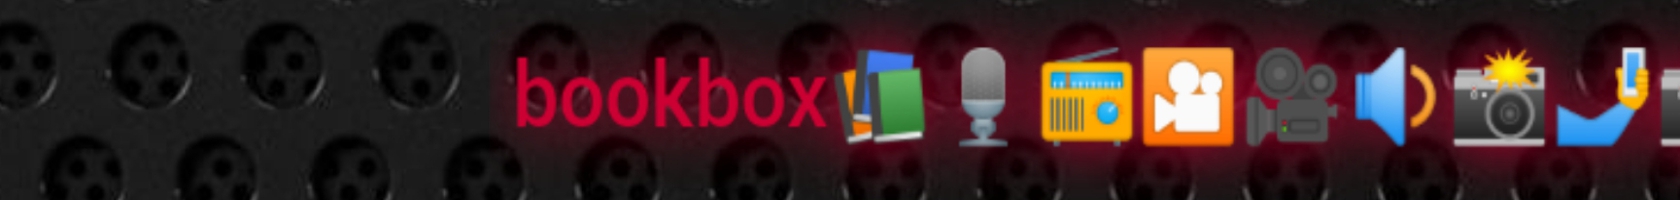  Bookboxx